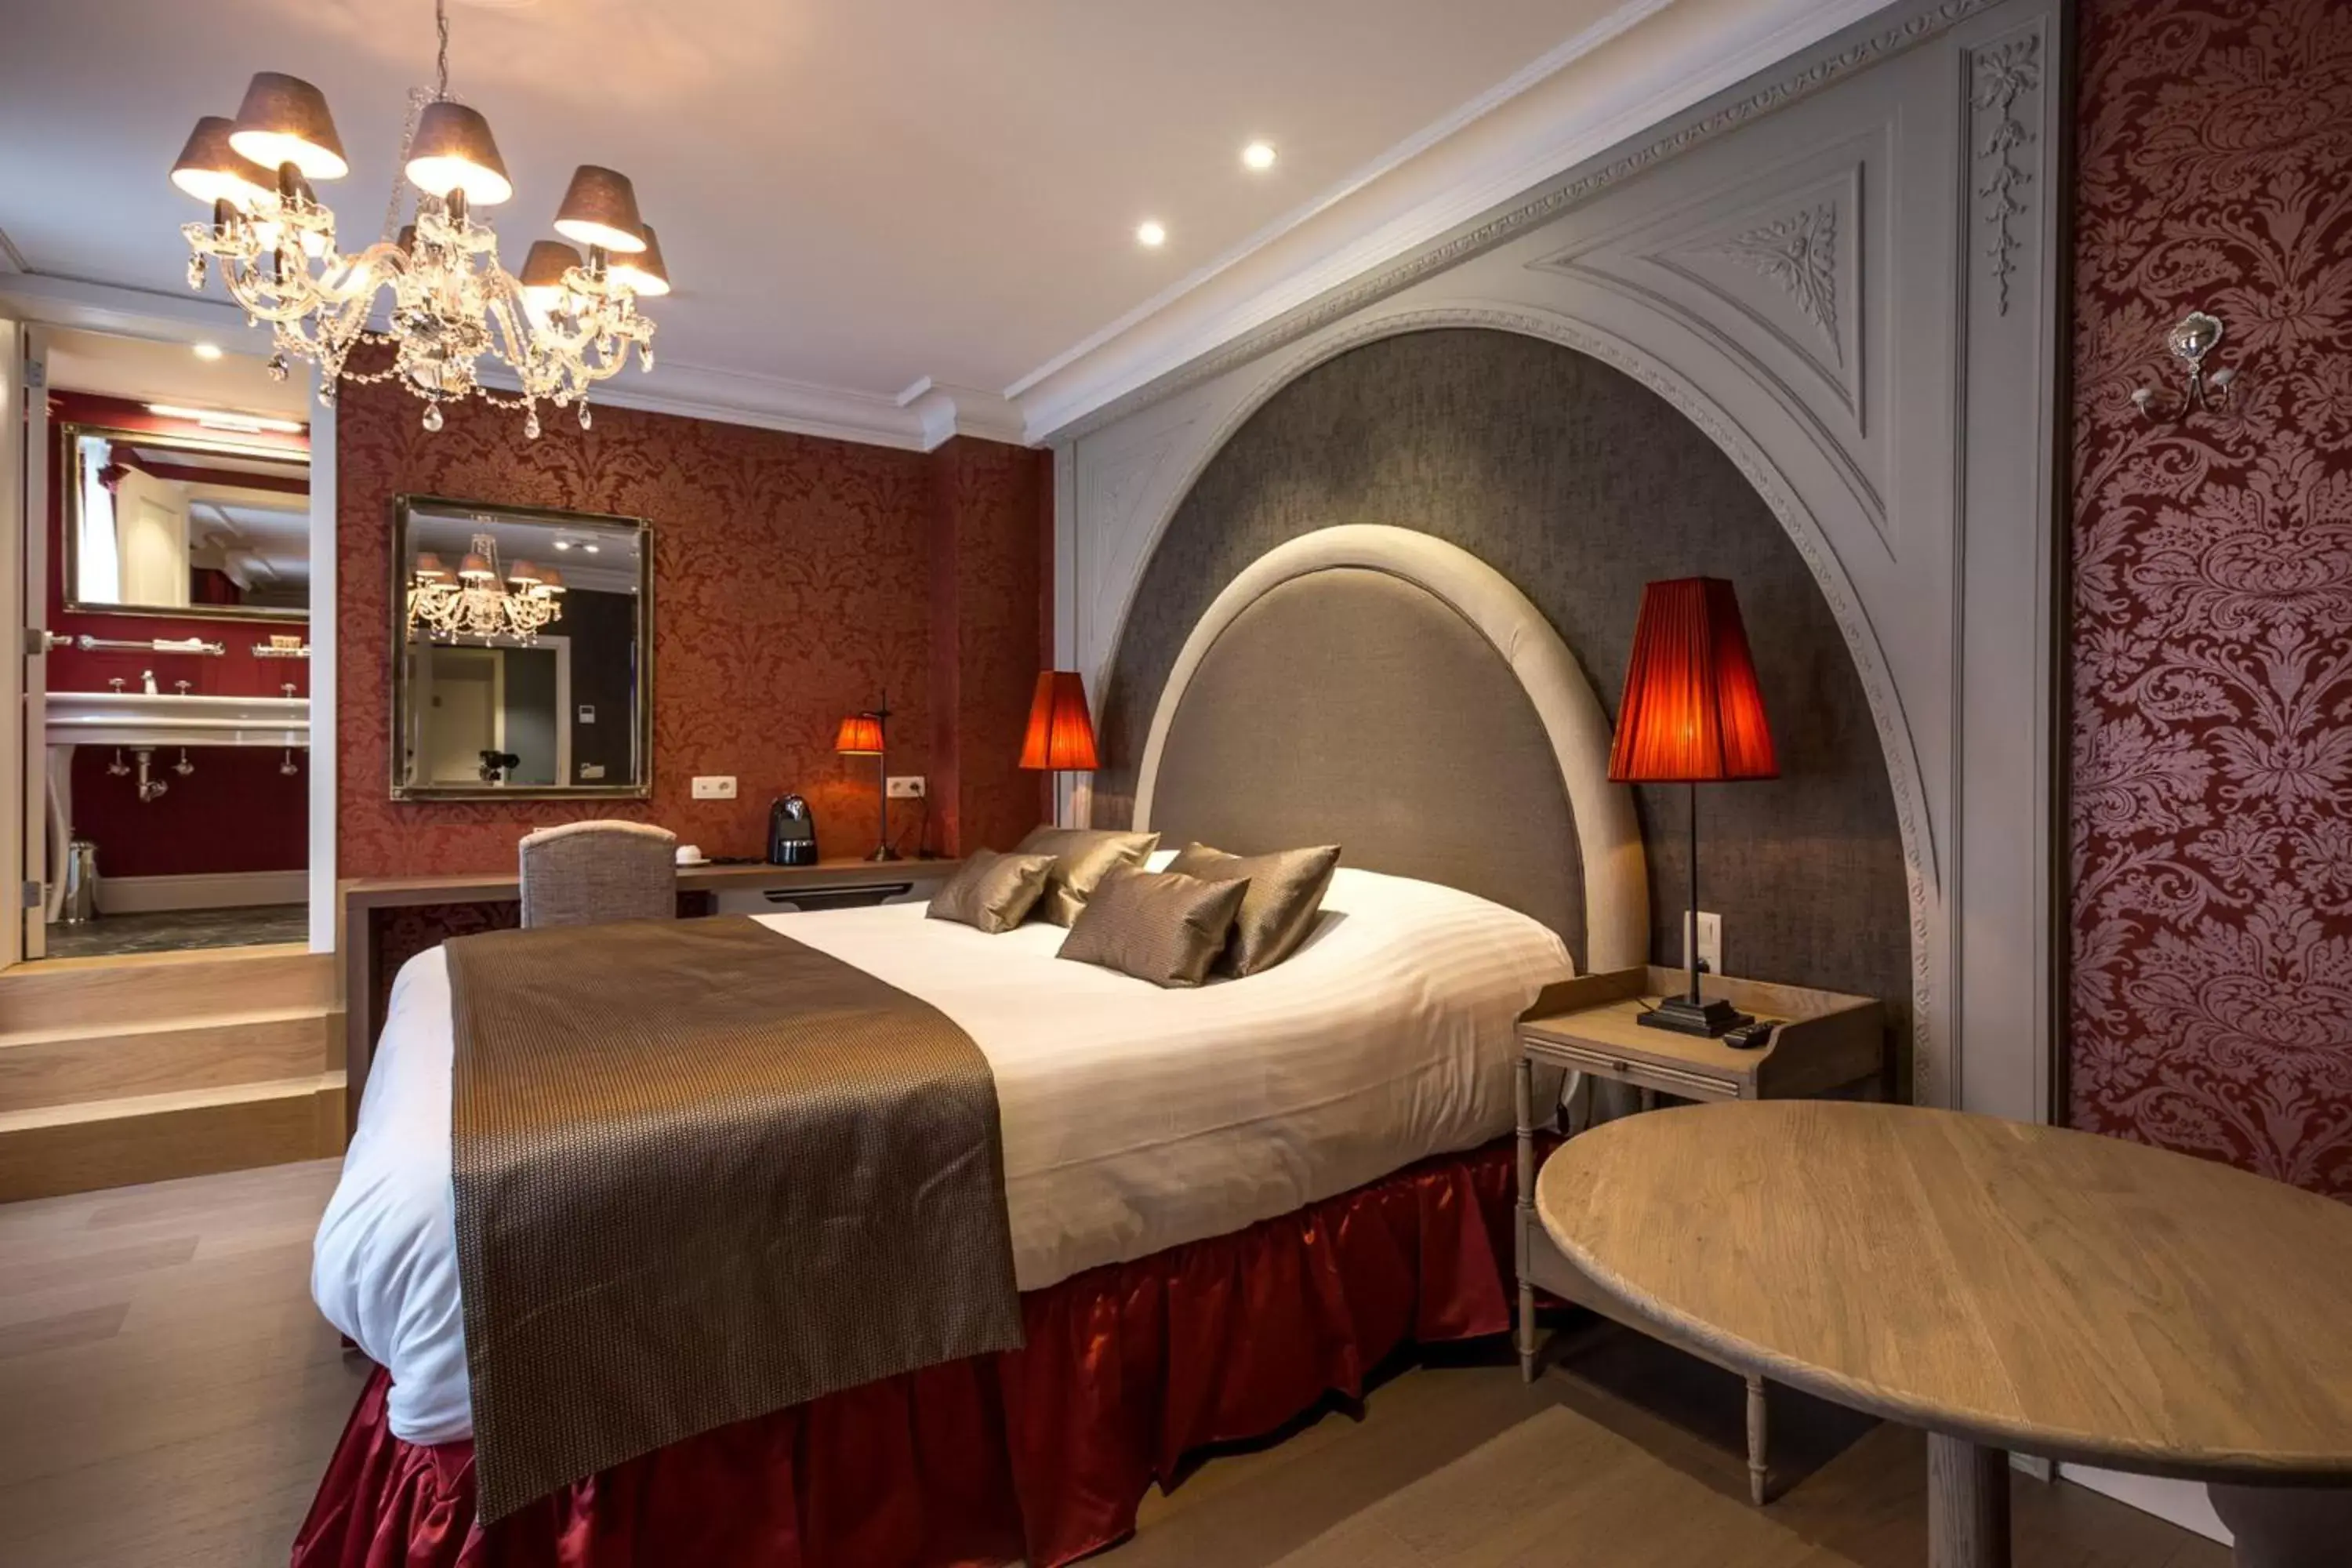 Bedroom, Room Photo in Boutique Hotel De Castillion - Small elegant family hotel